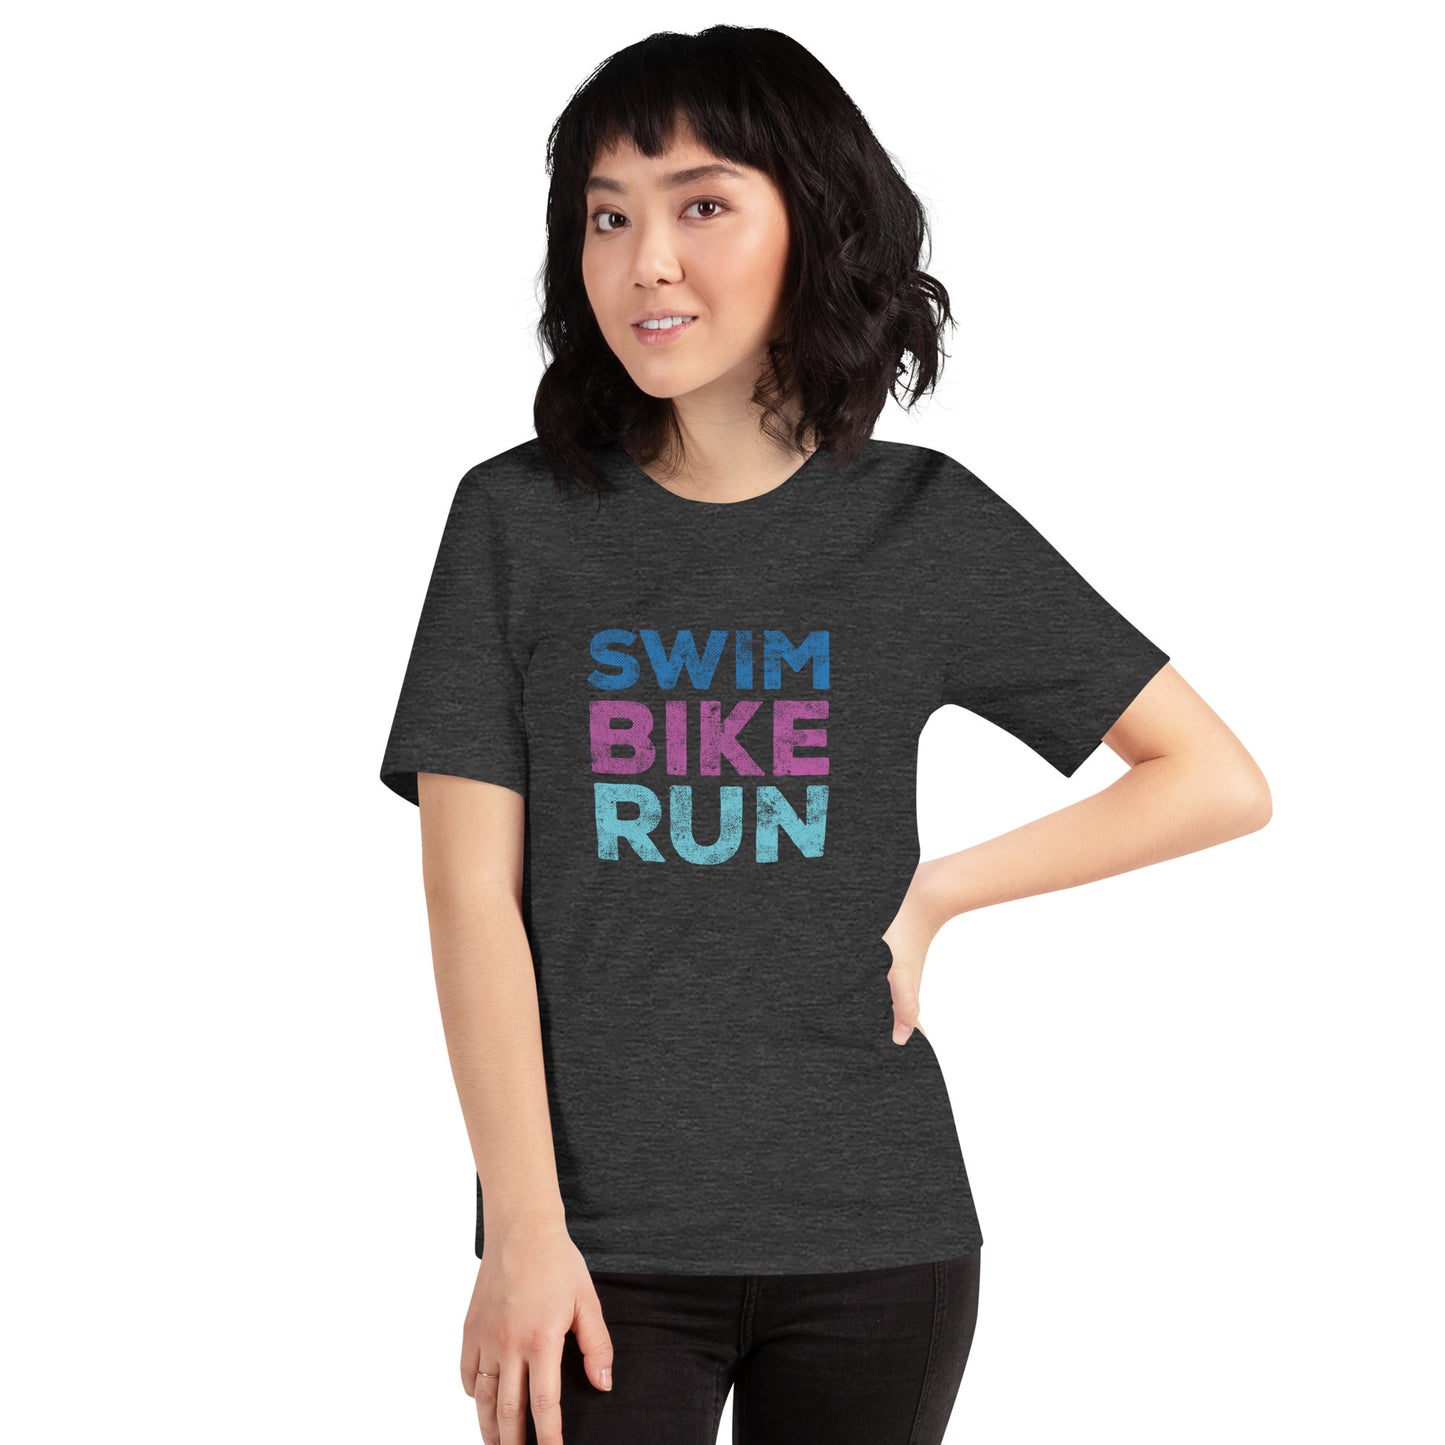 East Tennessee Women's Triathlon Club Swim Bike Run Shirt